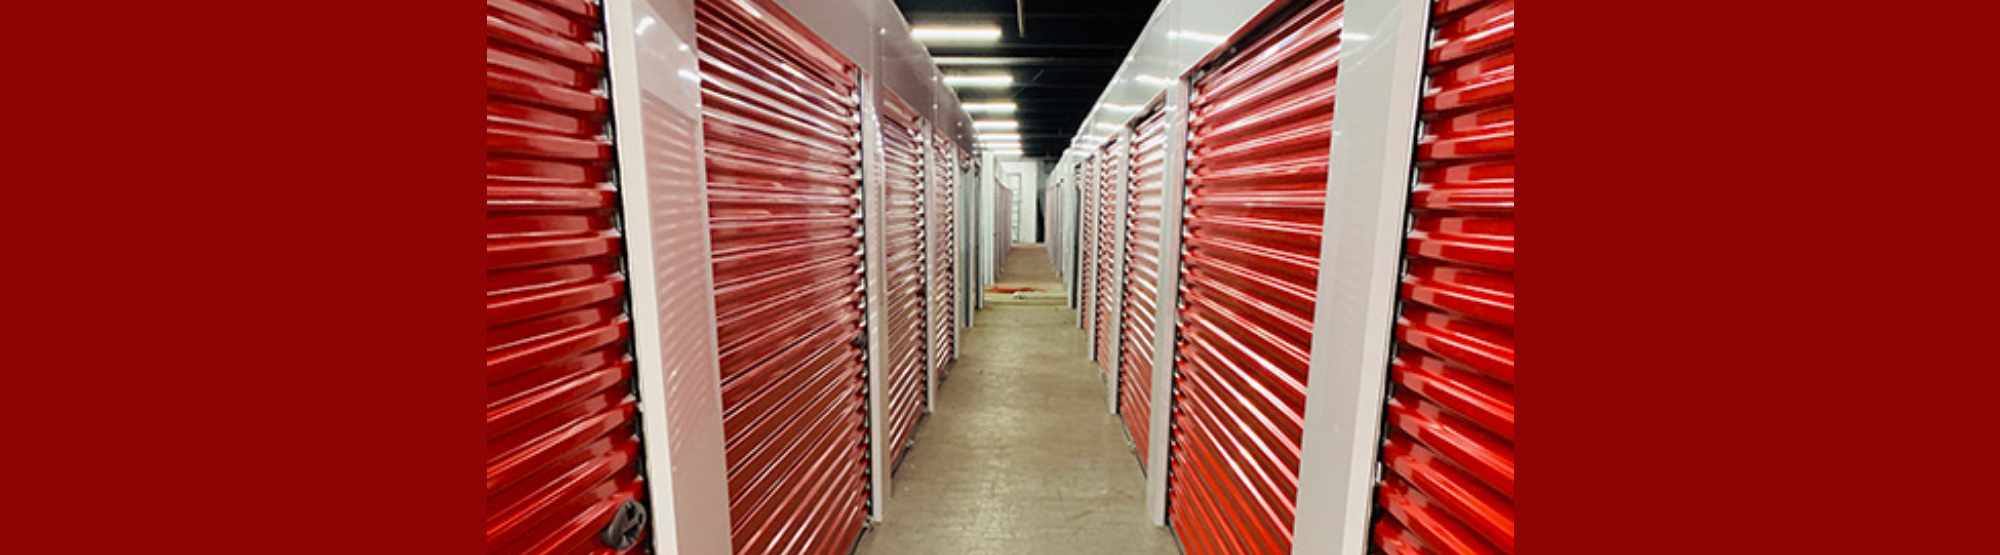 Storage at State Storage Group